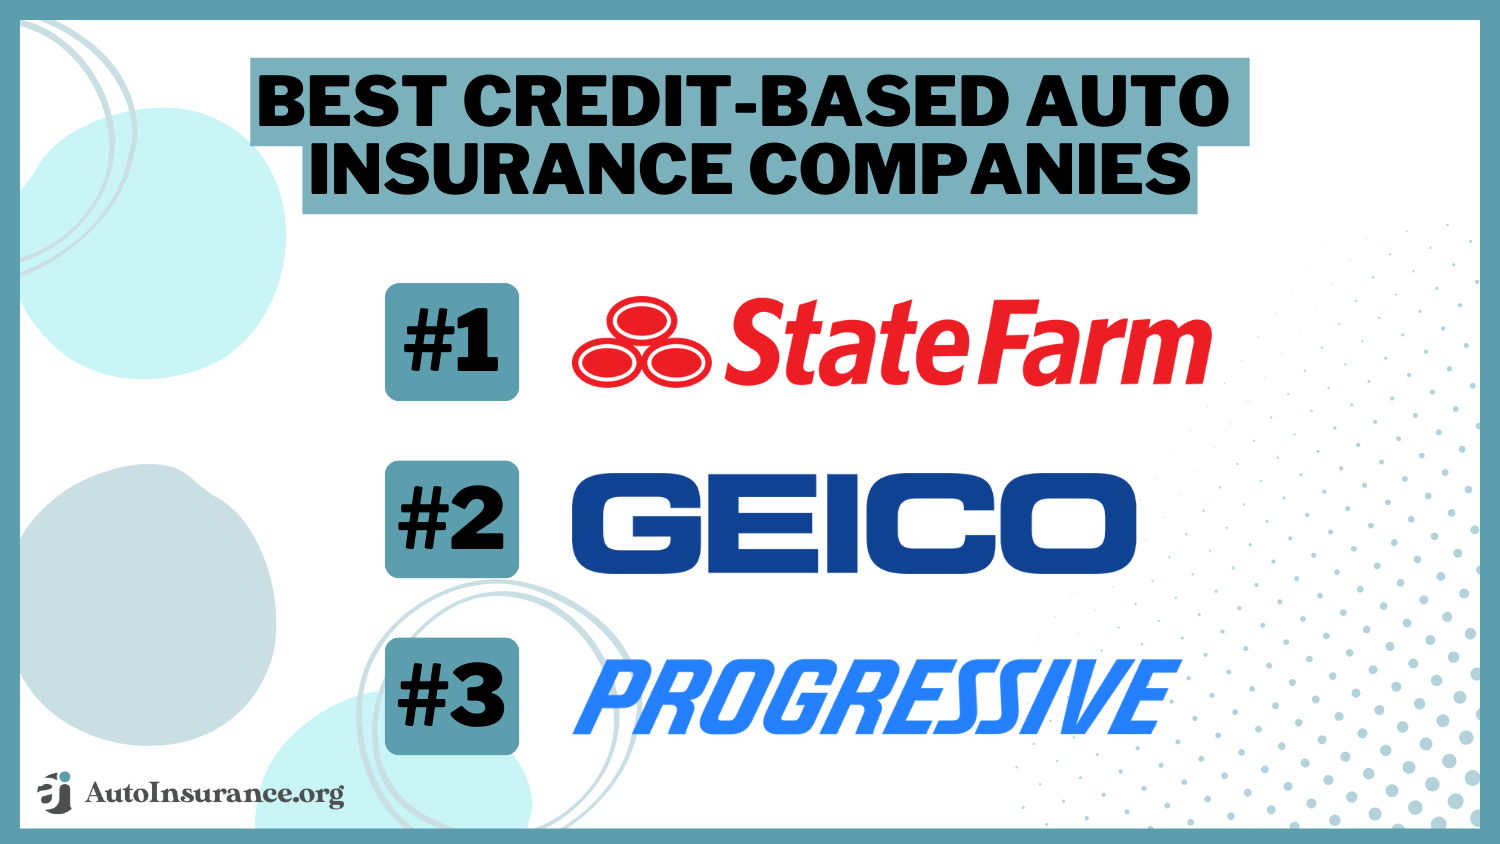 Best Credit-Based Auto Insurance Companies: State Farm, Geico, Progressive